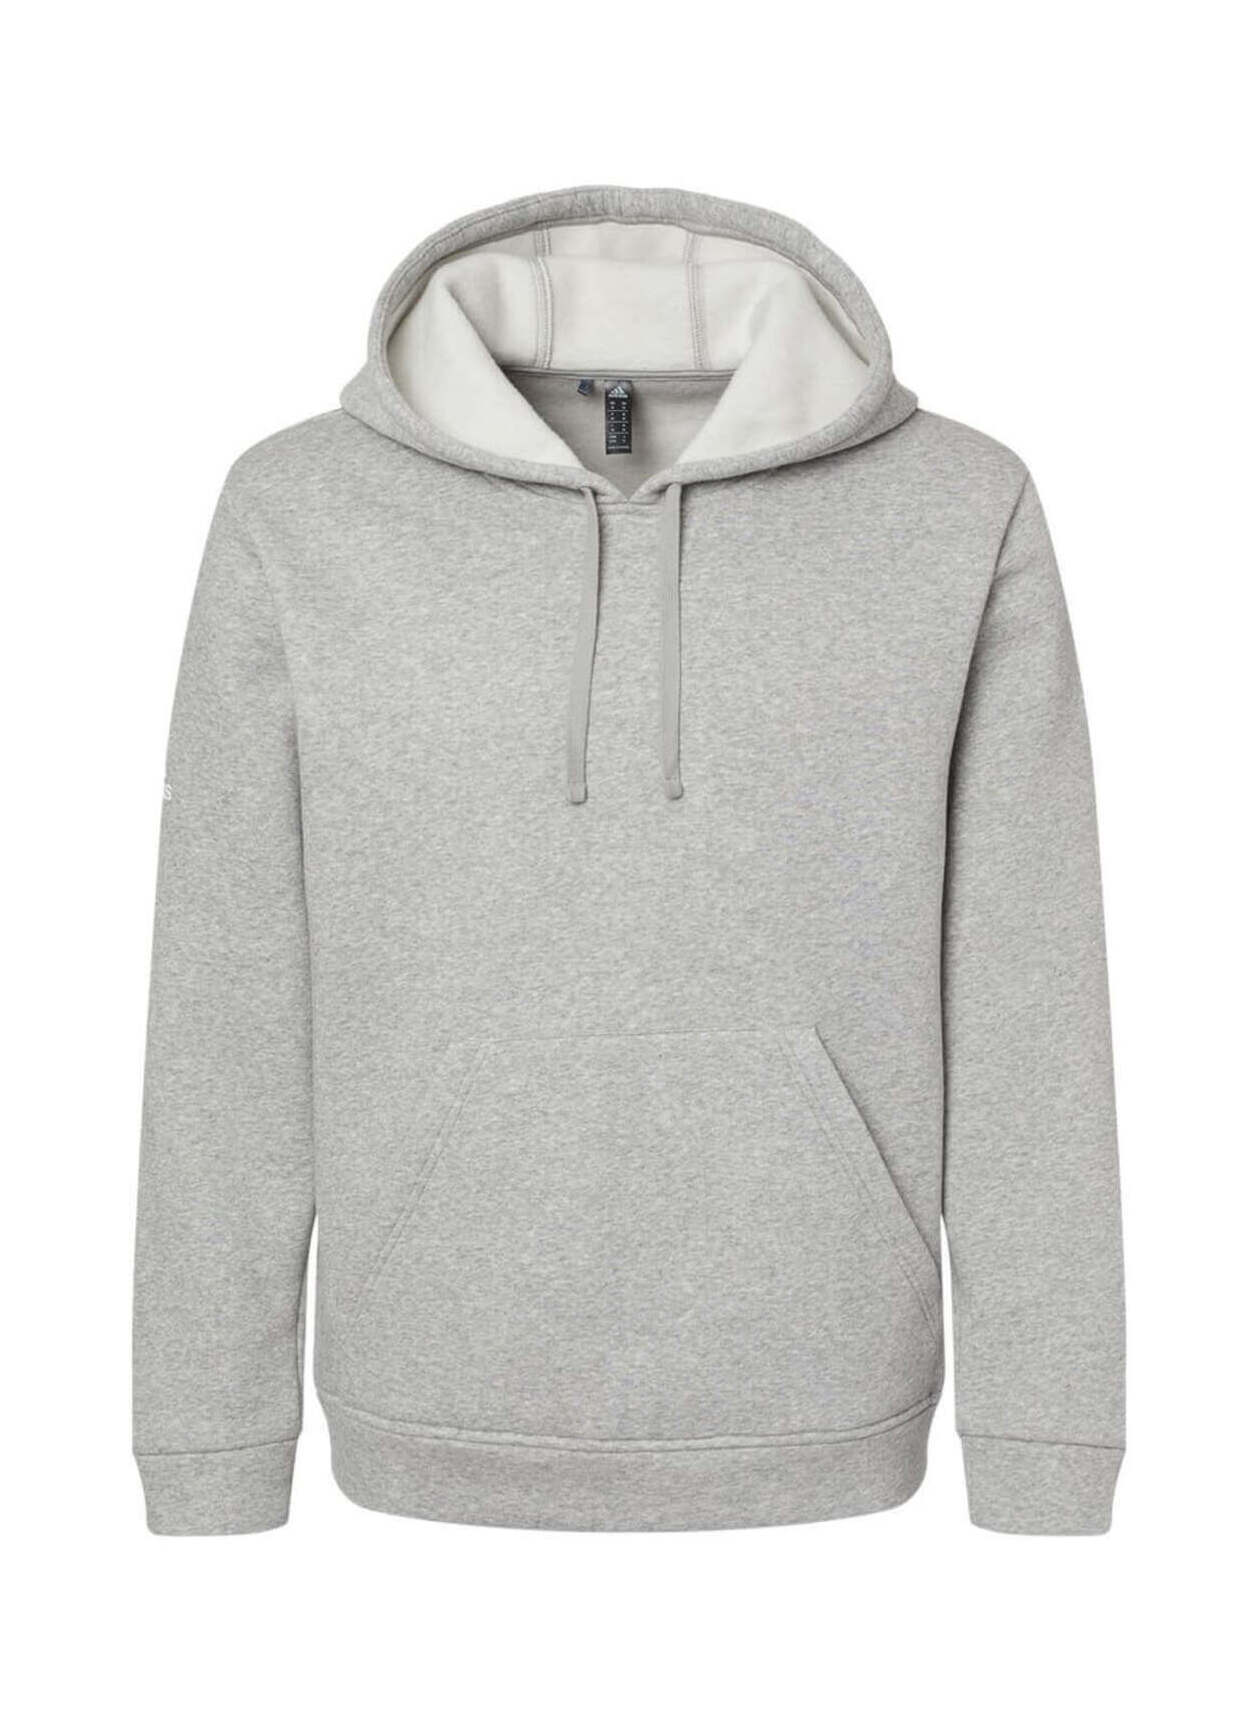 Adidas Men's Grey Heather Fleece Hooded Sweatshirt